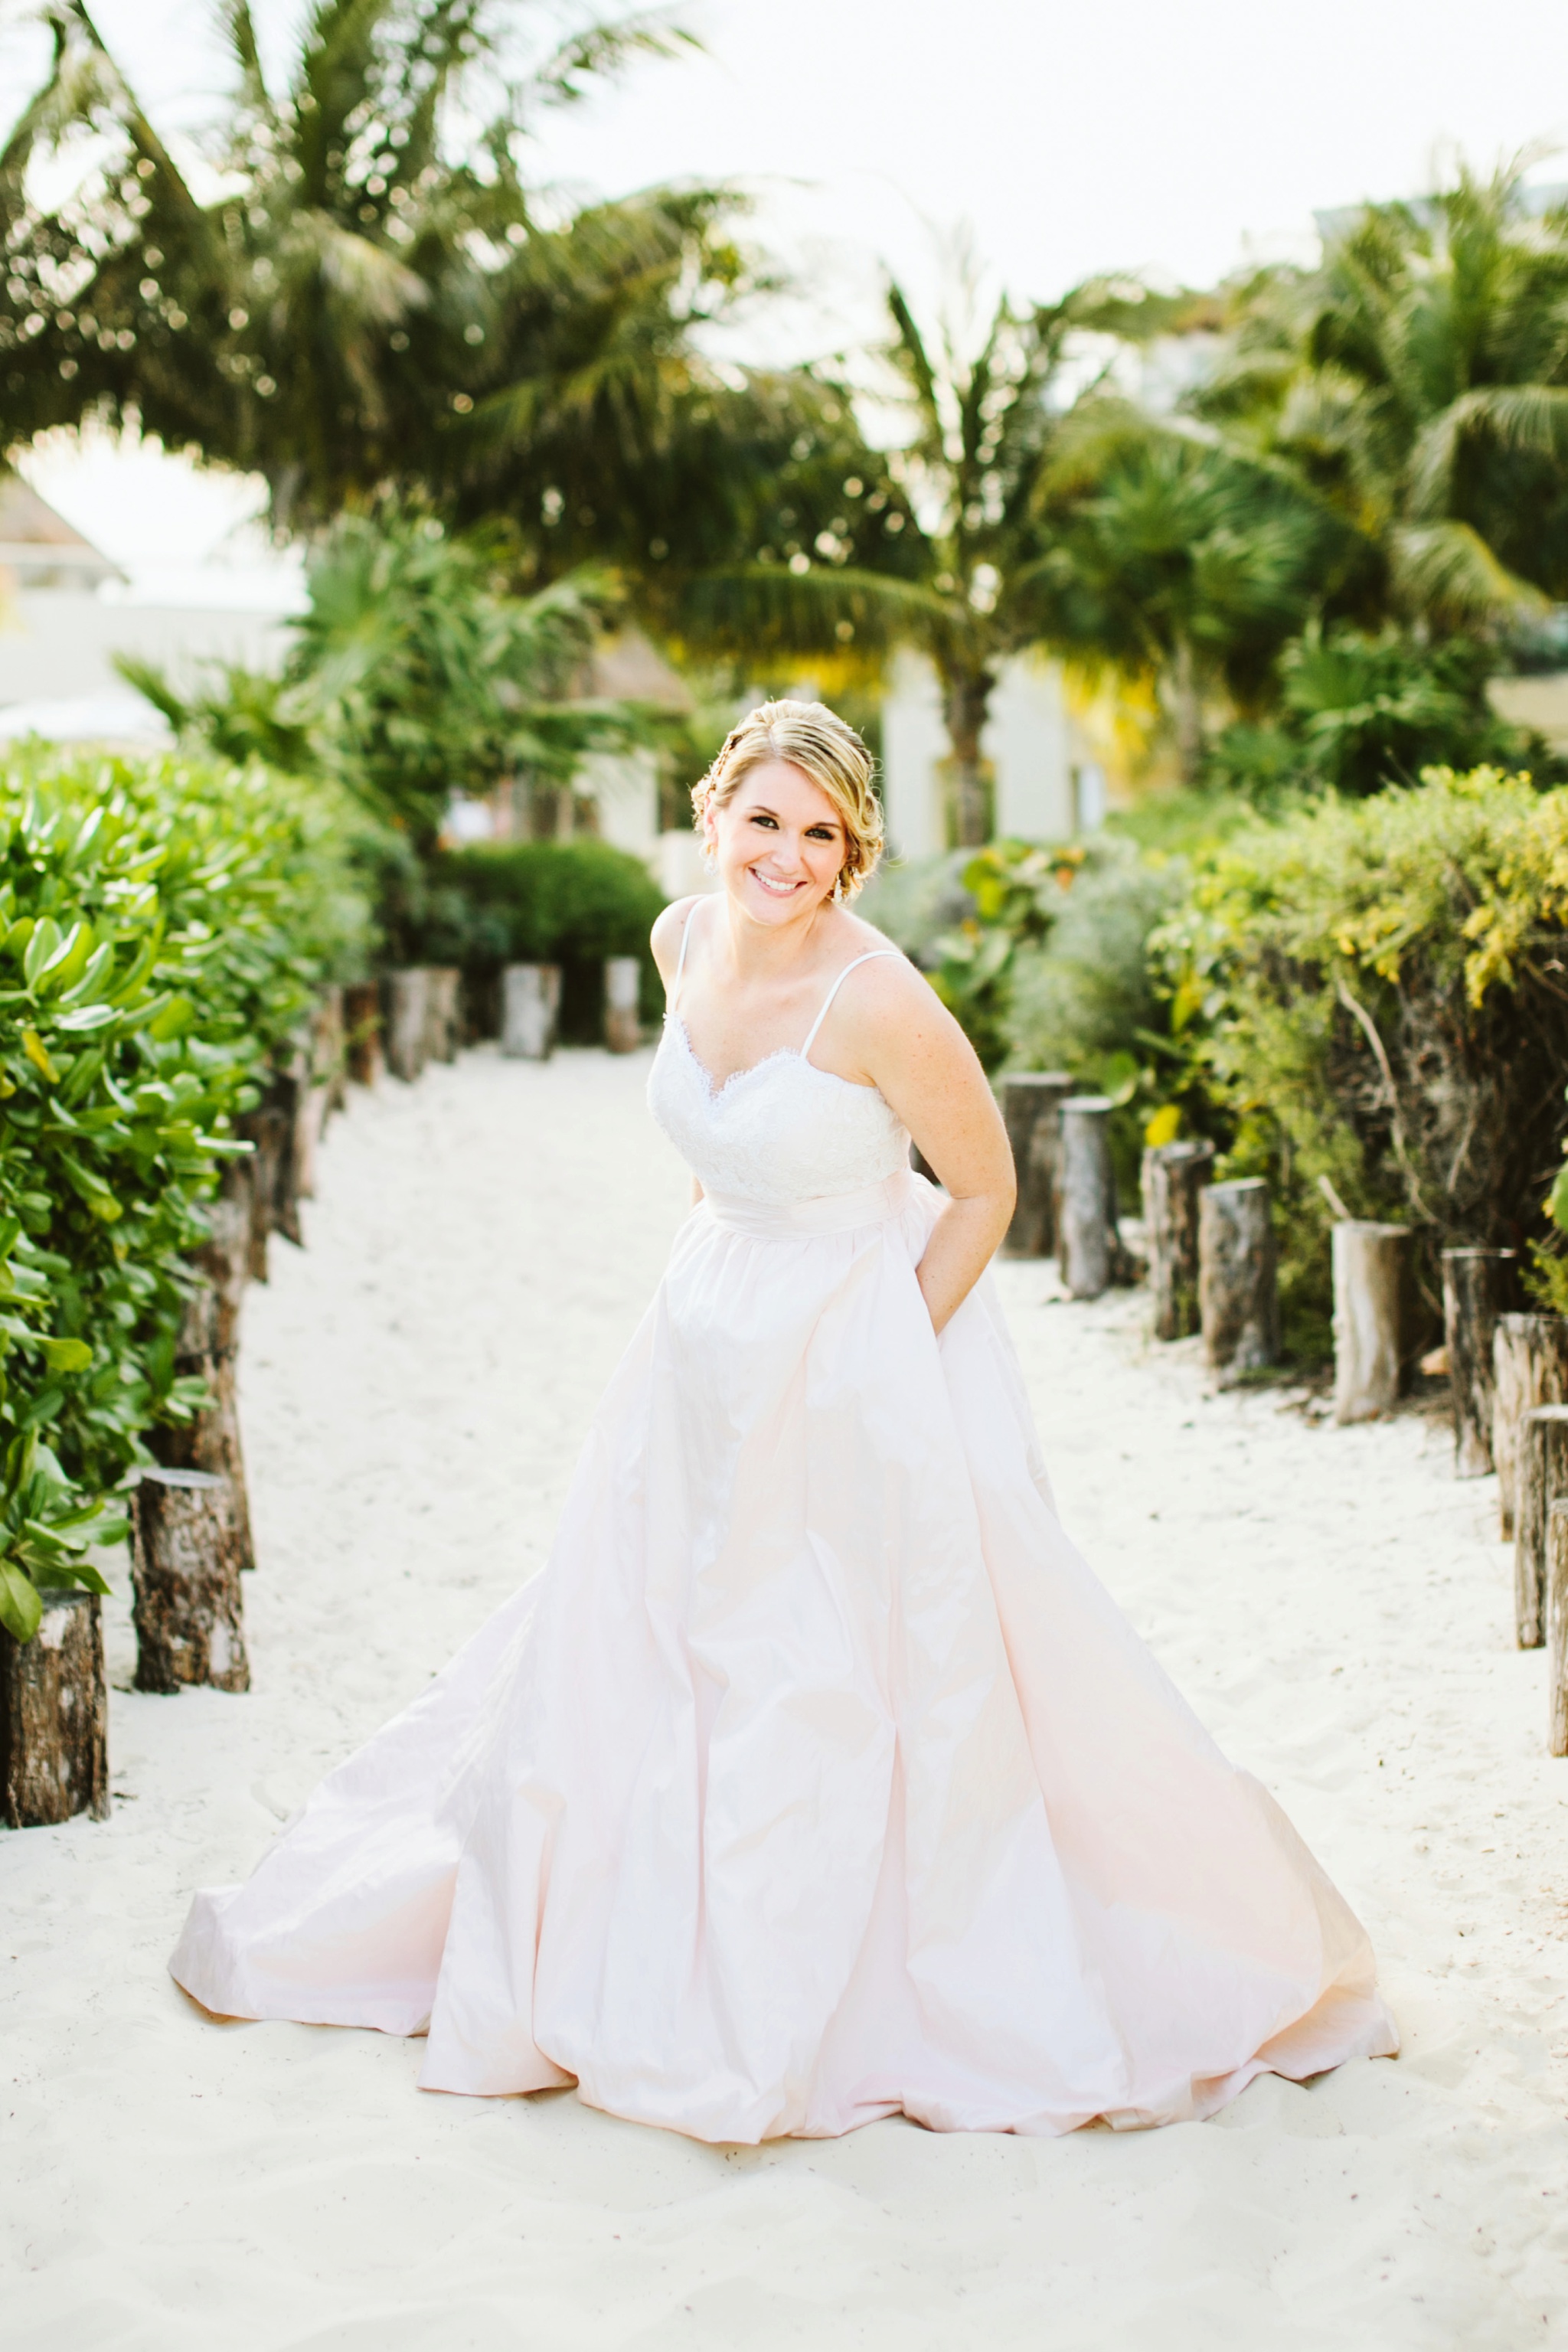 Moon Palace Resort Cancun Mexico Wedding Photos Bride at Sunset